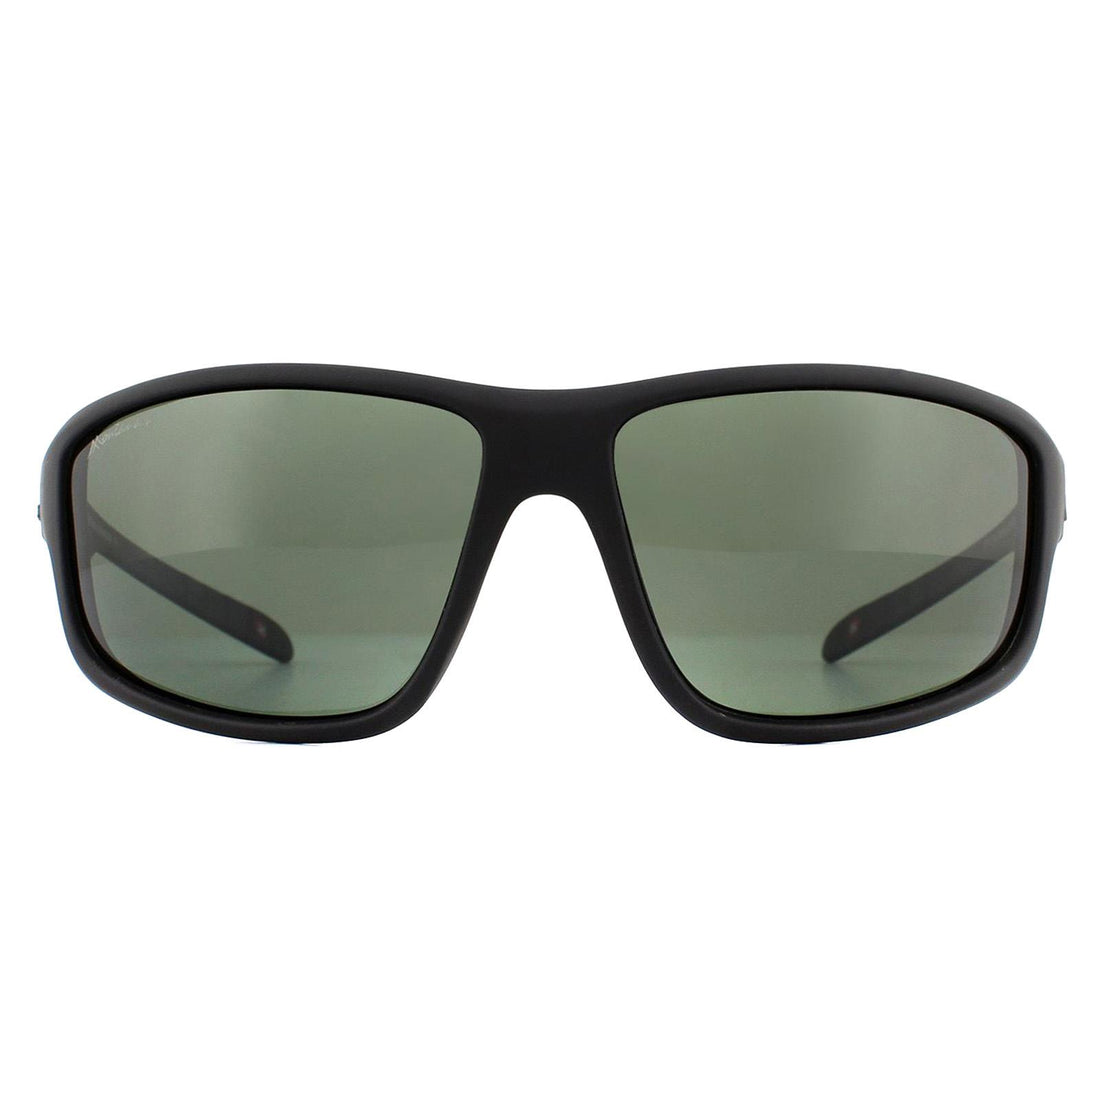 Montana SP313 Sunglasses Black Rubber Green G15 Polarized